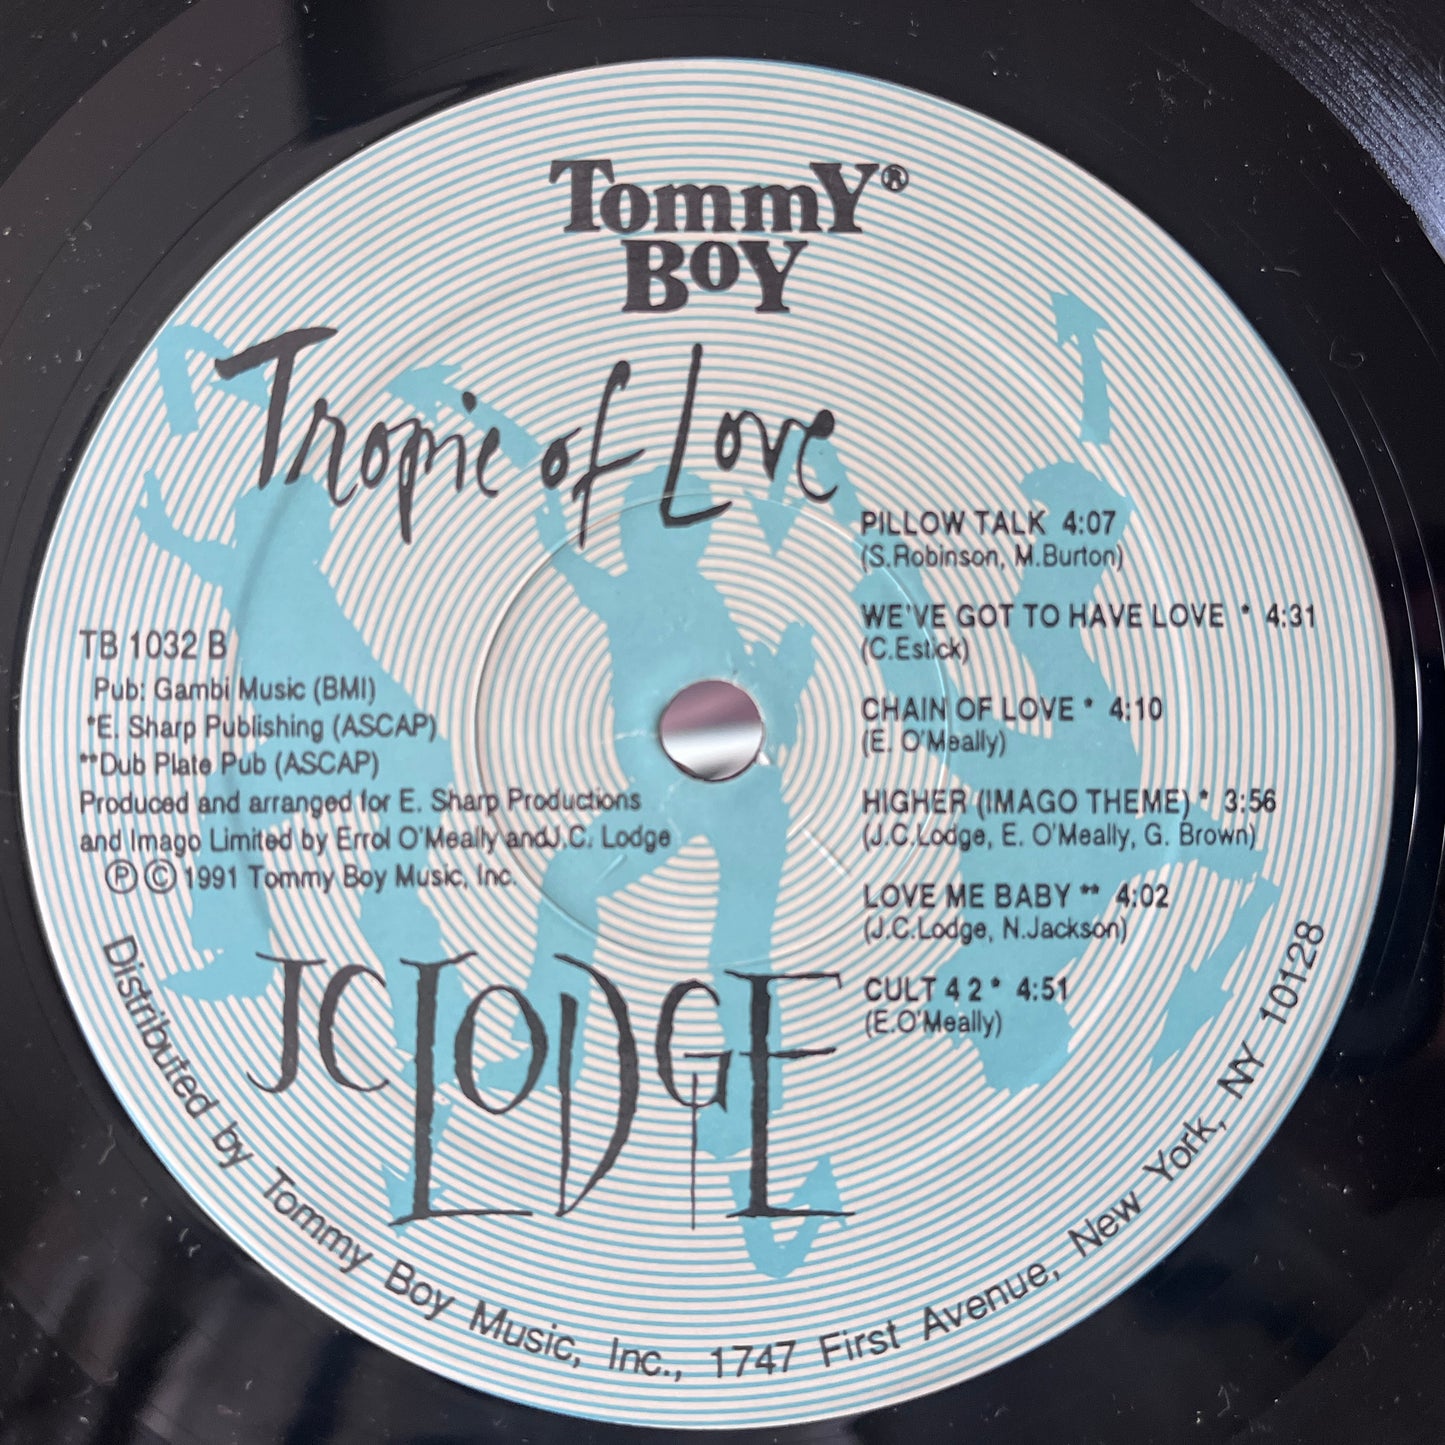 JC Lodge – Tropic Of Love